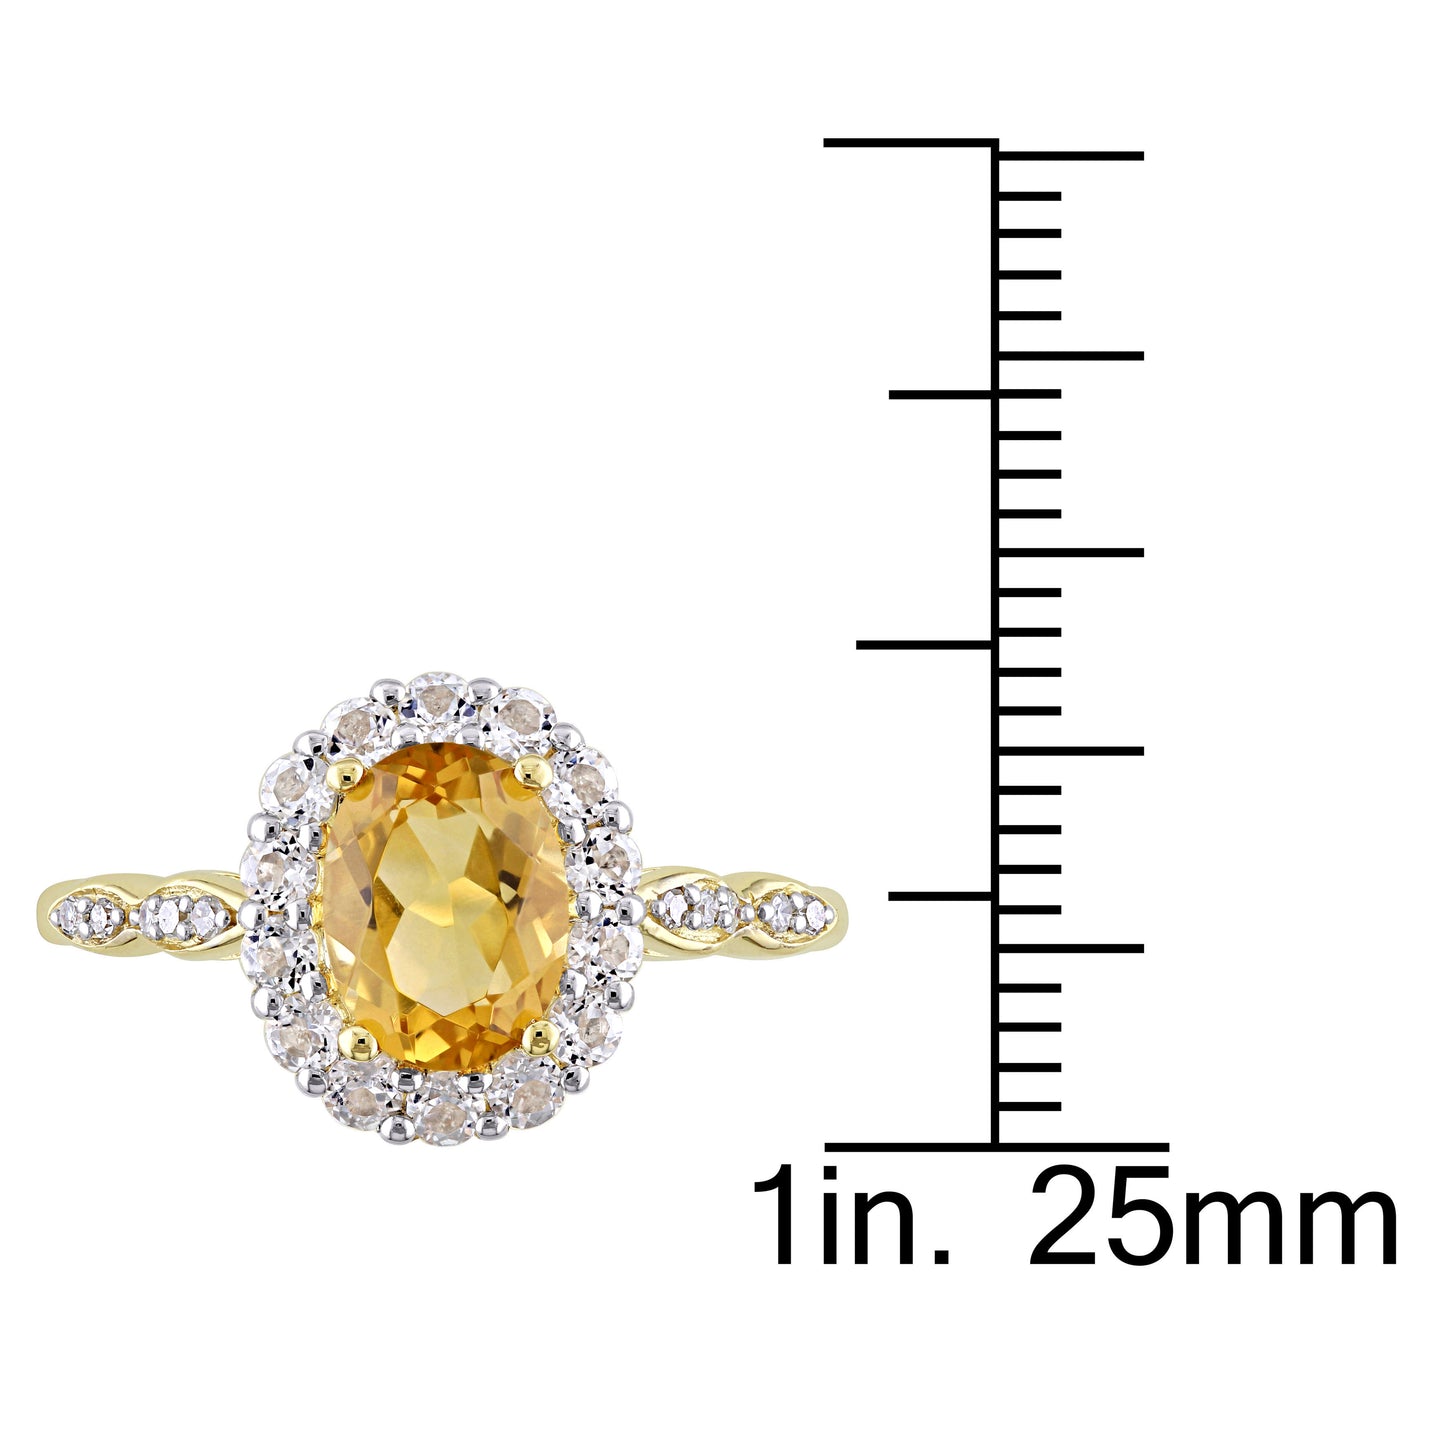 Oval Cut Citrine, White Topaz & Diamond Halo Ring in 14k Yellow Gold